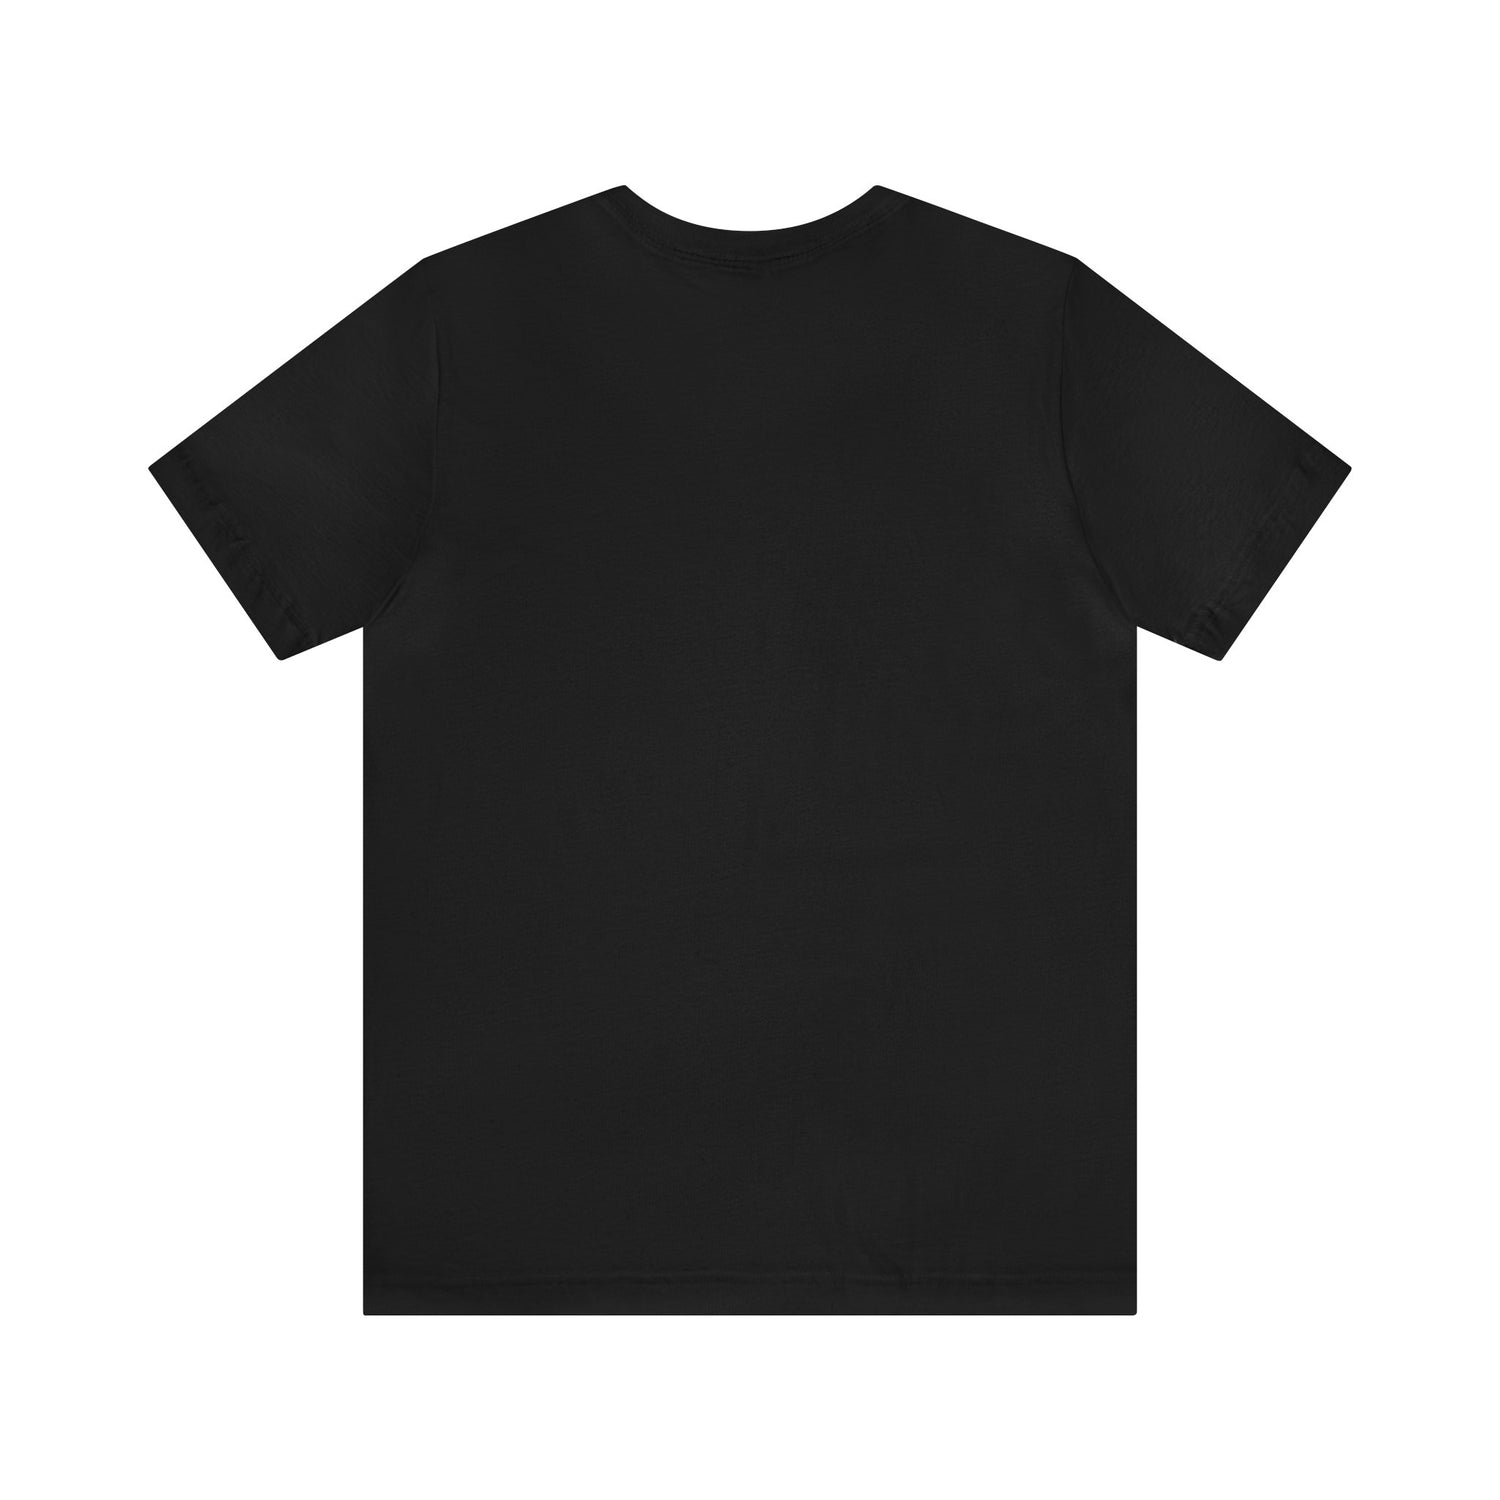 Doctor T-Shirt | Doctor Gift Idea T-Shirt Petrova Designs